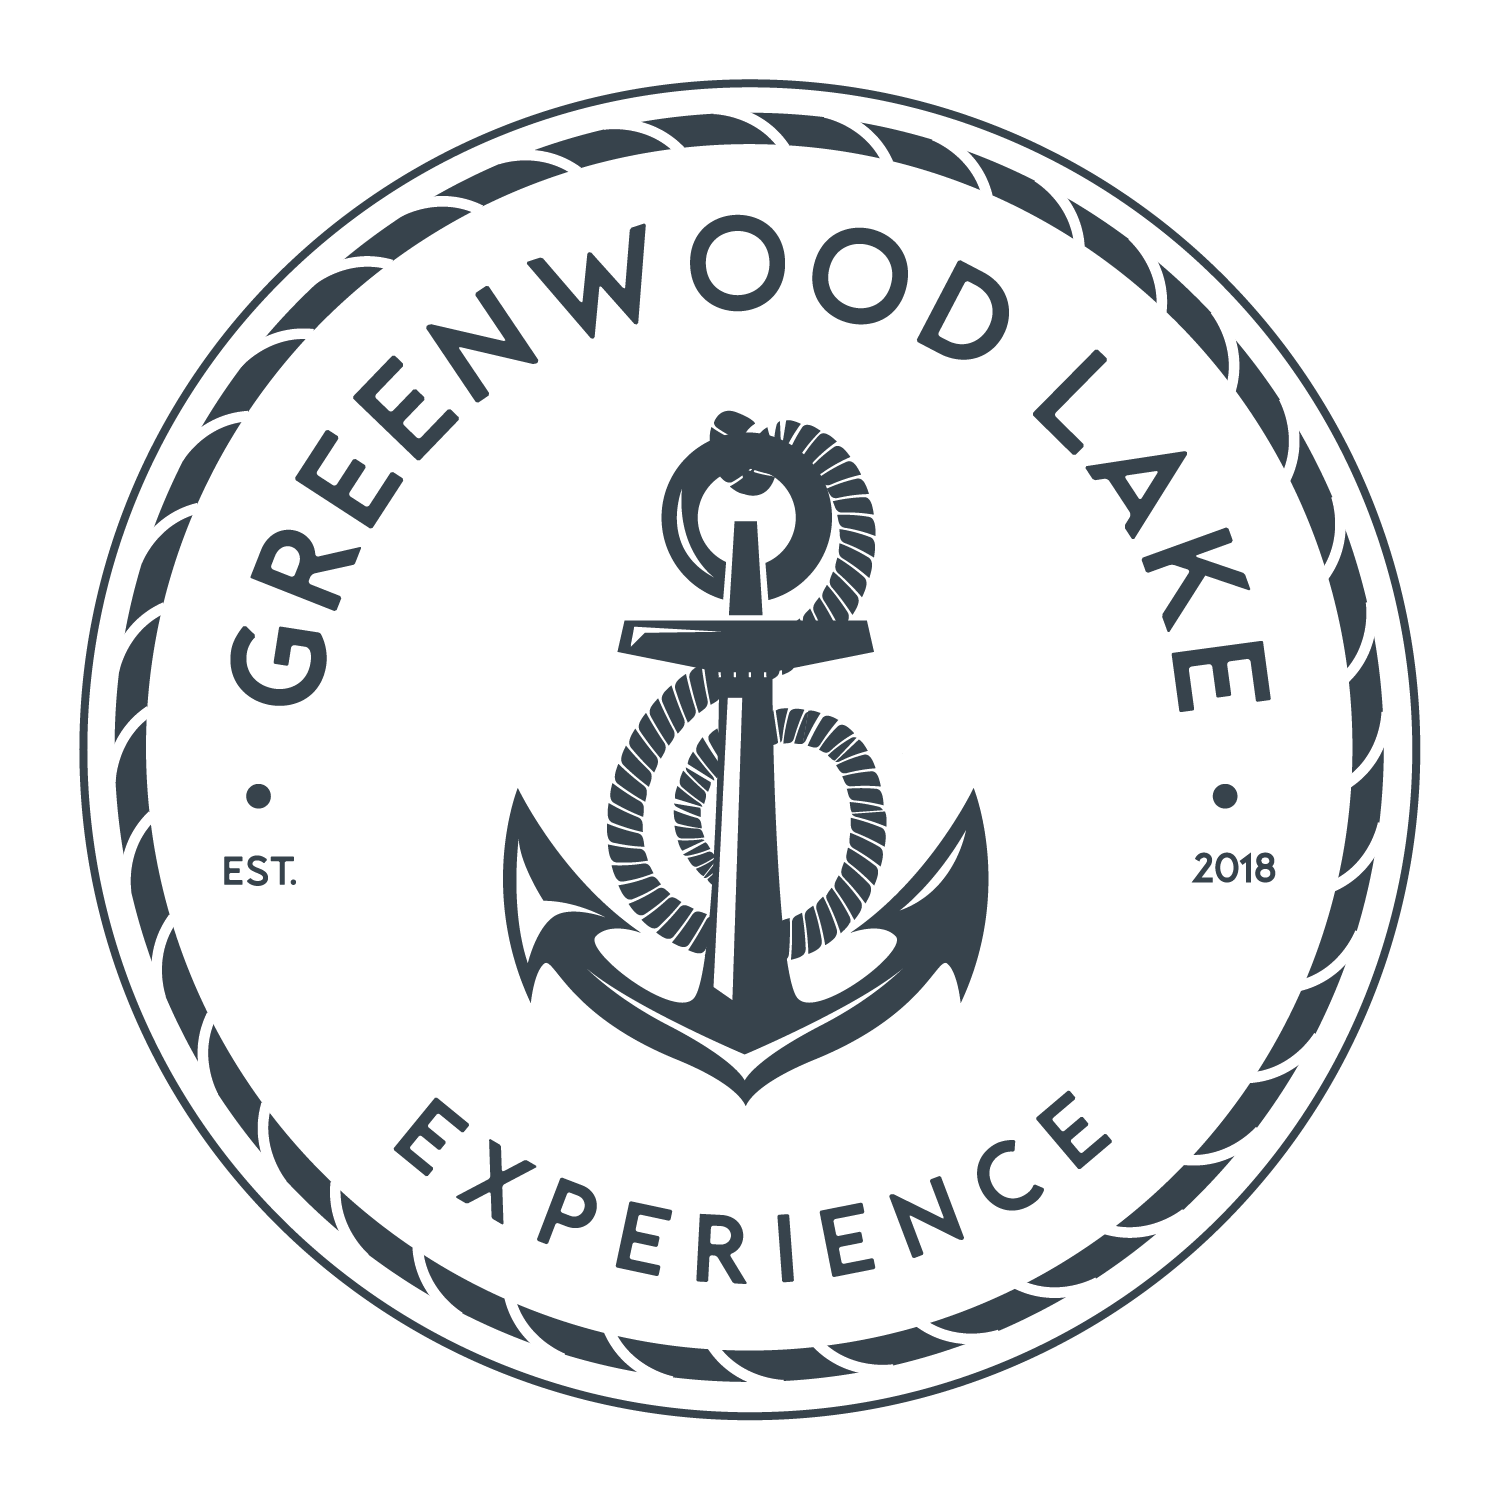 Greenwood Lake Experience